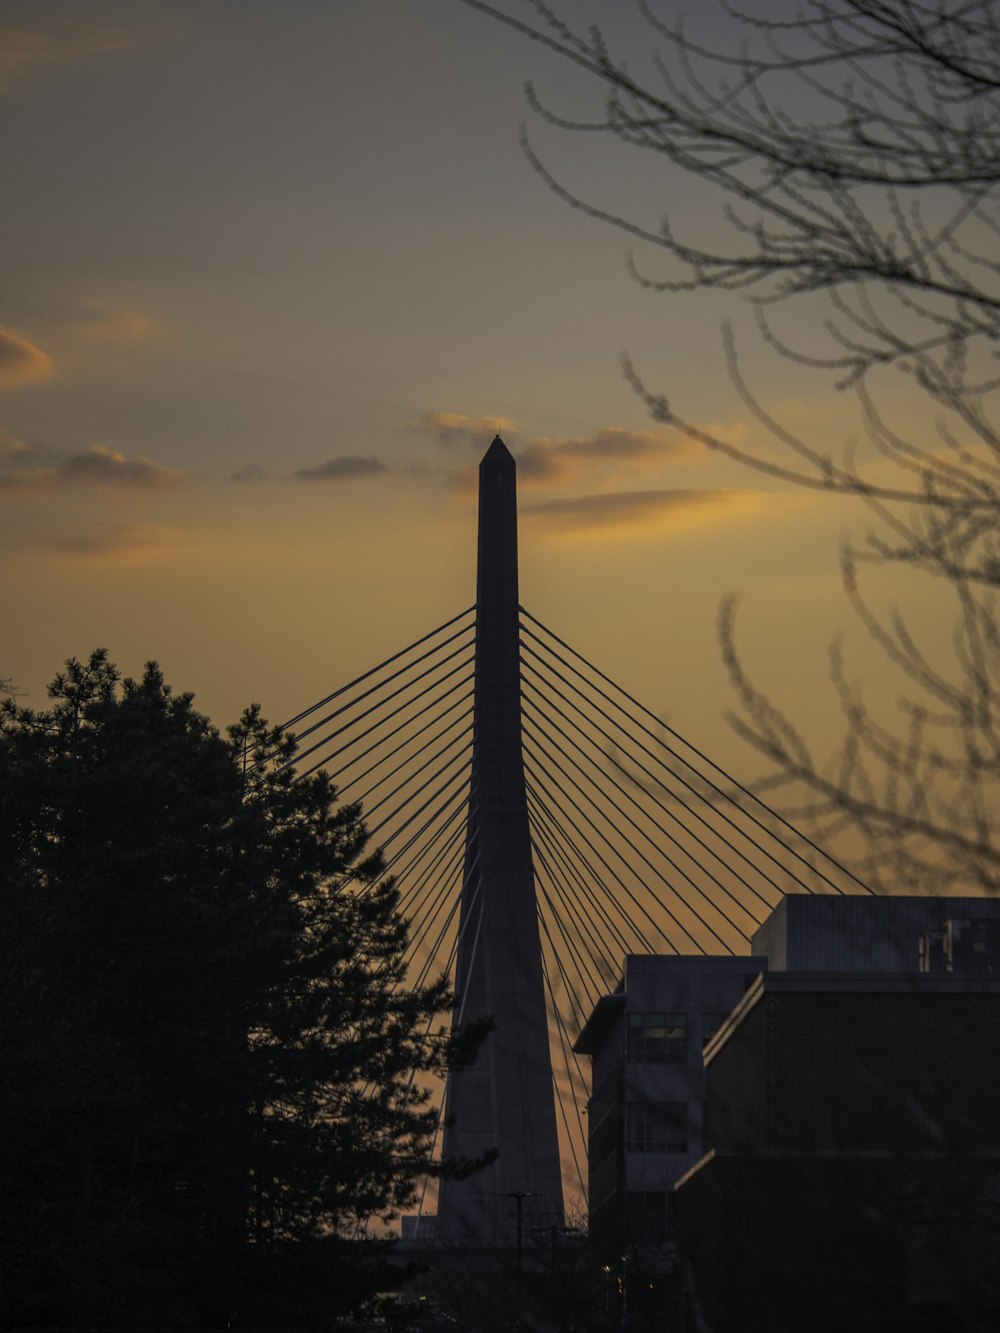 the sun is setting behind a tall bridge